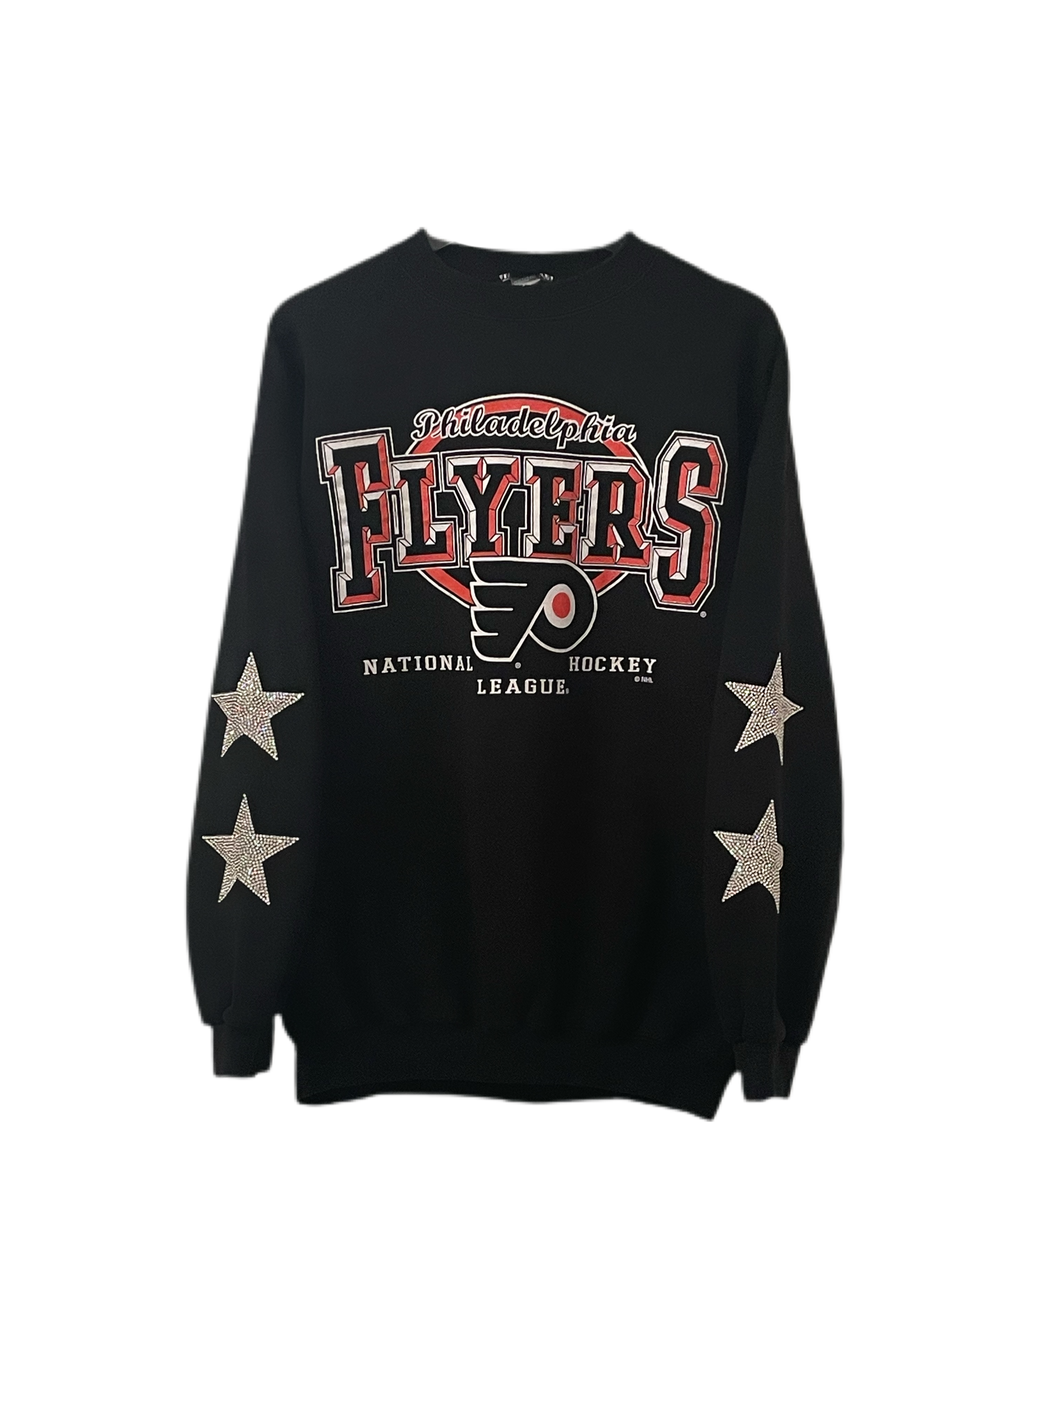 Philadelphia Flyers, NHL One of a KIND Vintage Sweatshirt with Crystal Star Design